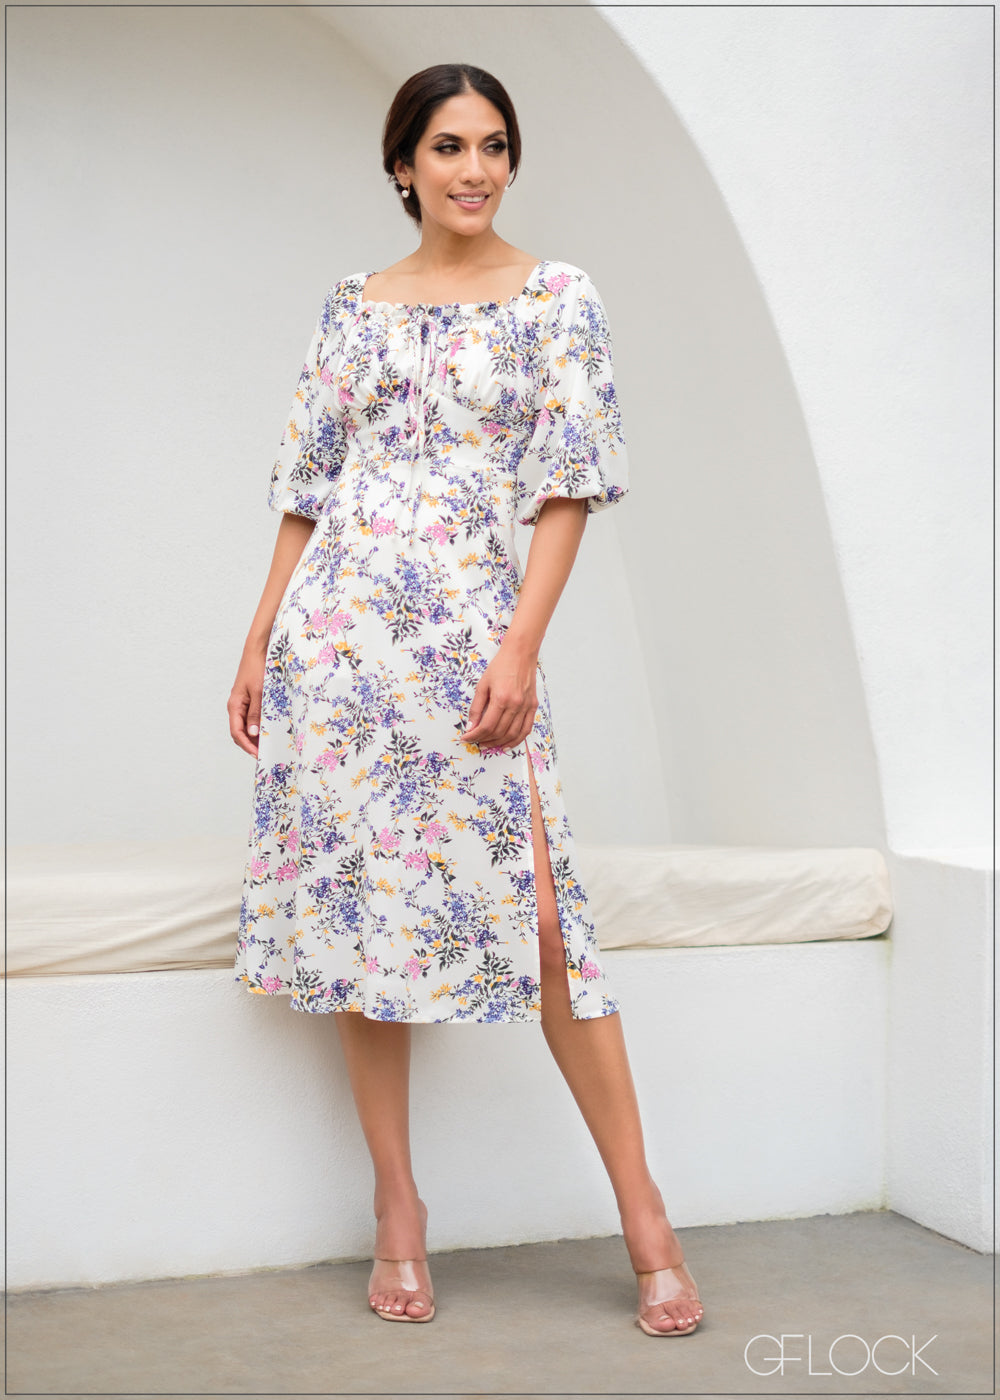 Floral Bustier Dress - 171123 